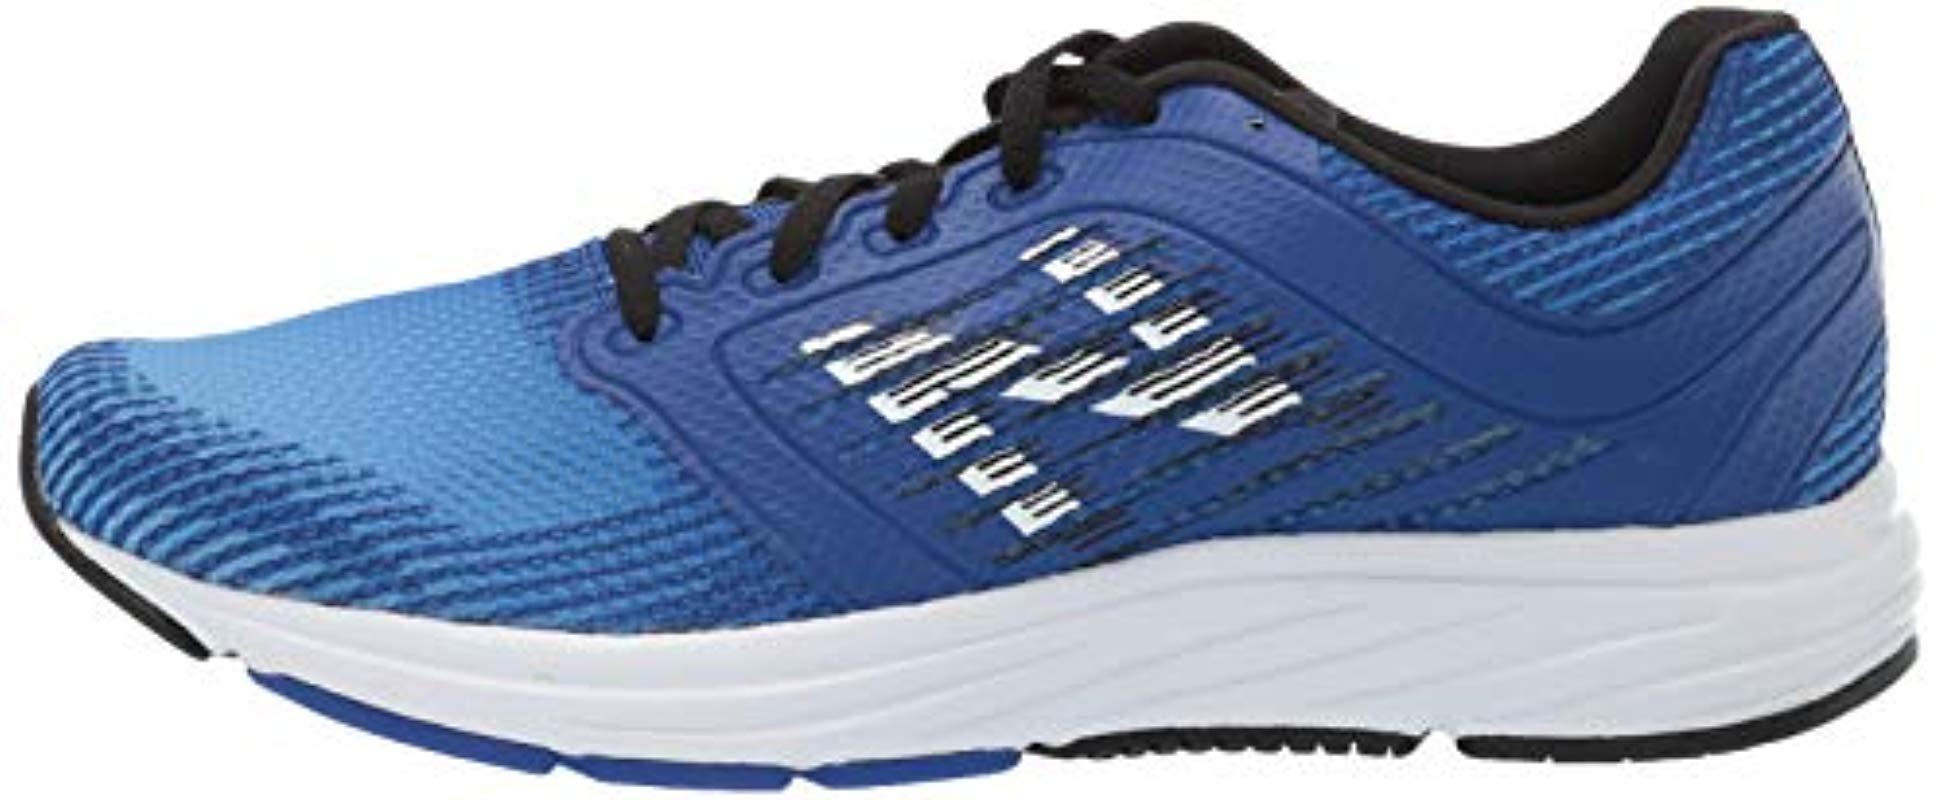 New Balance 480 V6 Running Shoe in Blue for Men - Save 70% - Lyst